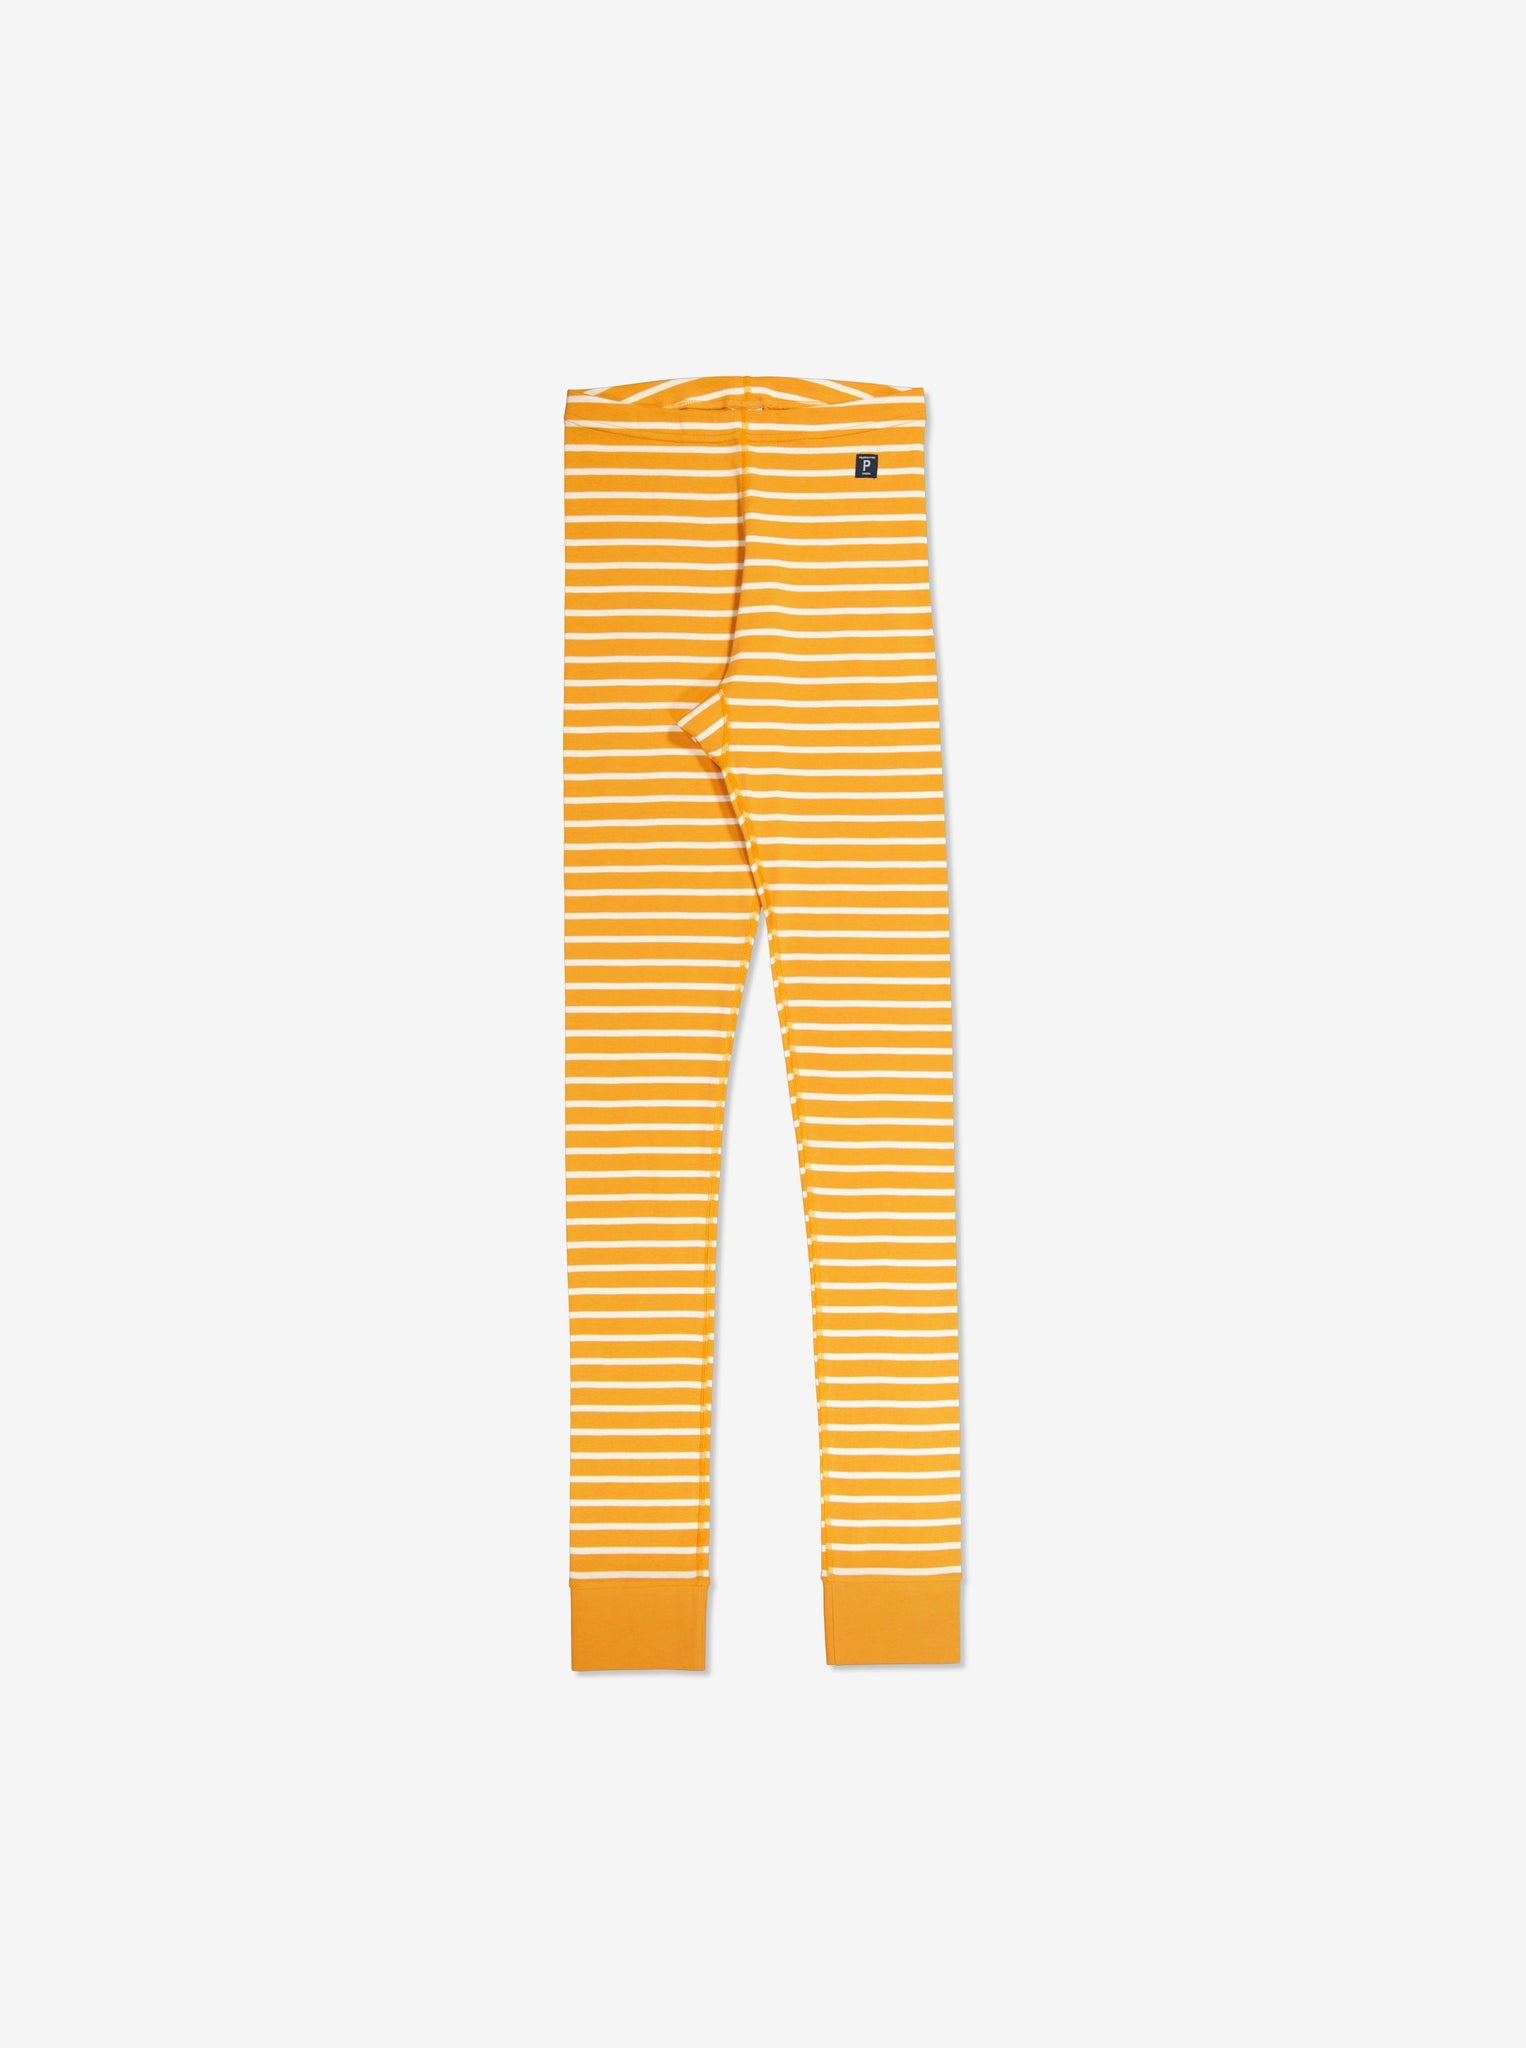  Organic Striped Yellow Adult Pyjamas from Polarn O. Pyret Kidswear. Made with 100% organic cotton.